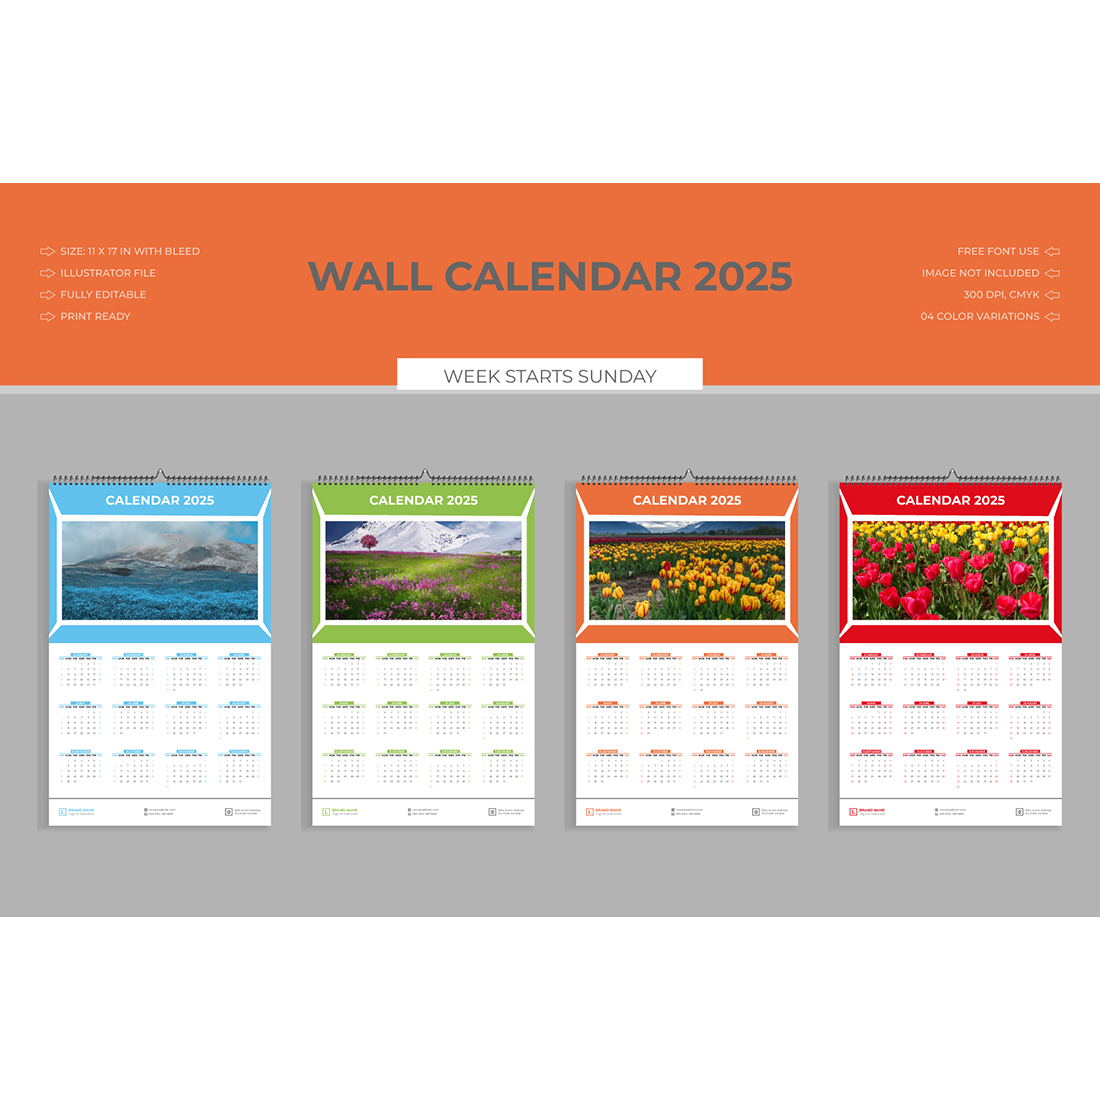 2025 Wall Calendar Design preview image.